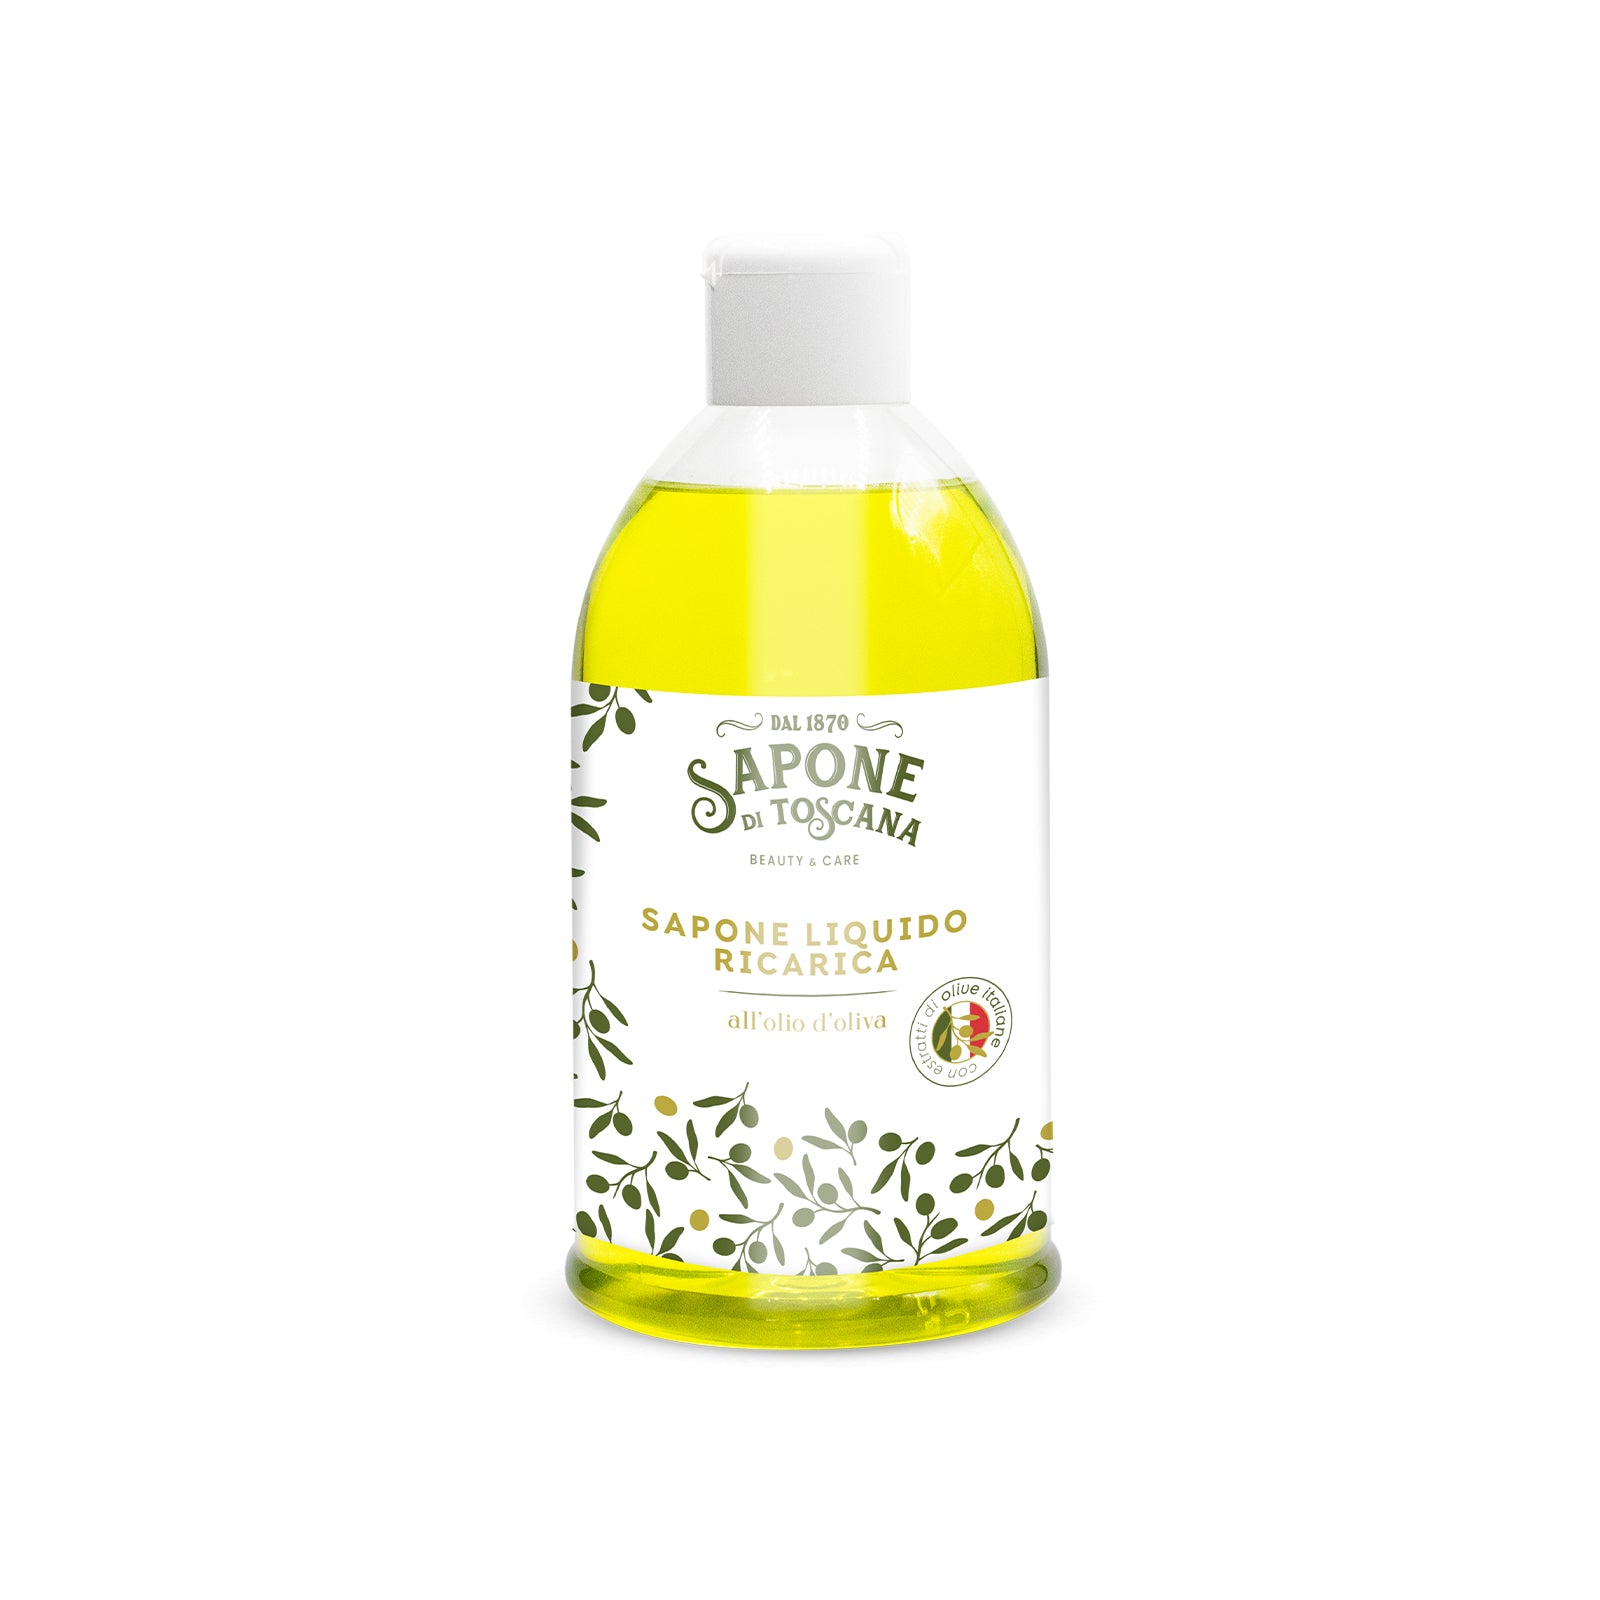 Sapone liquido ricarica - Olio d'oliva